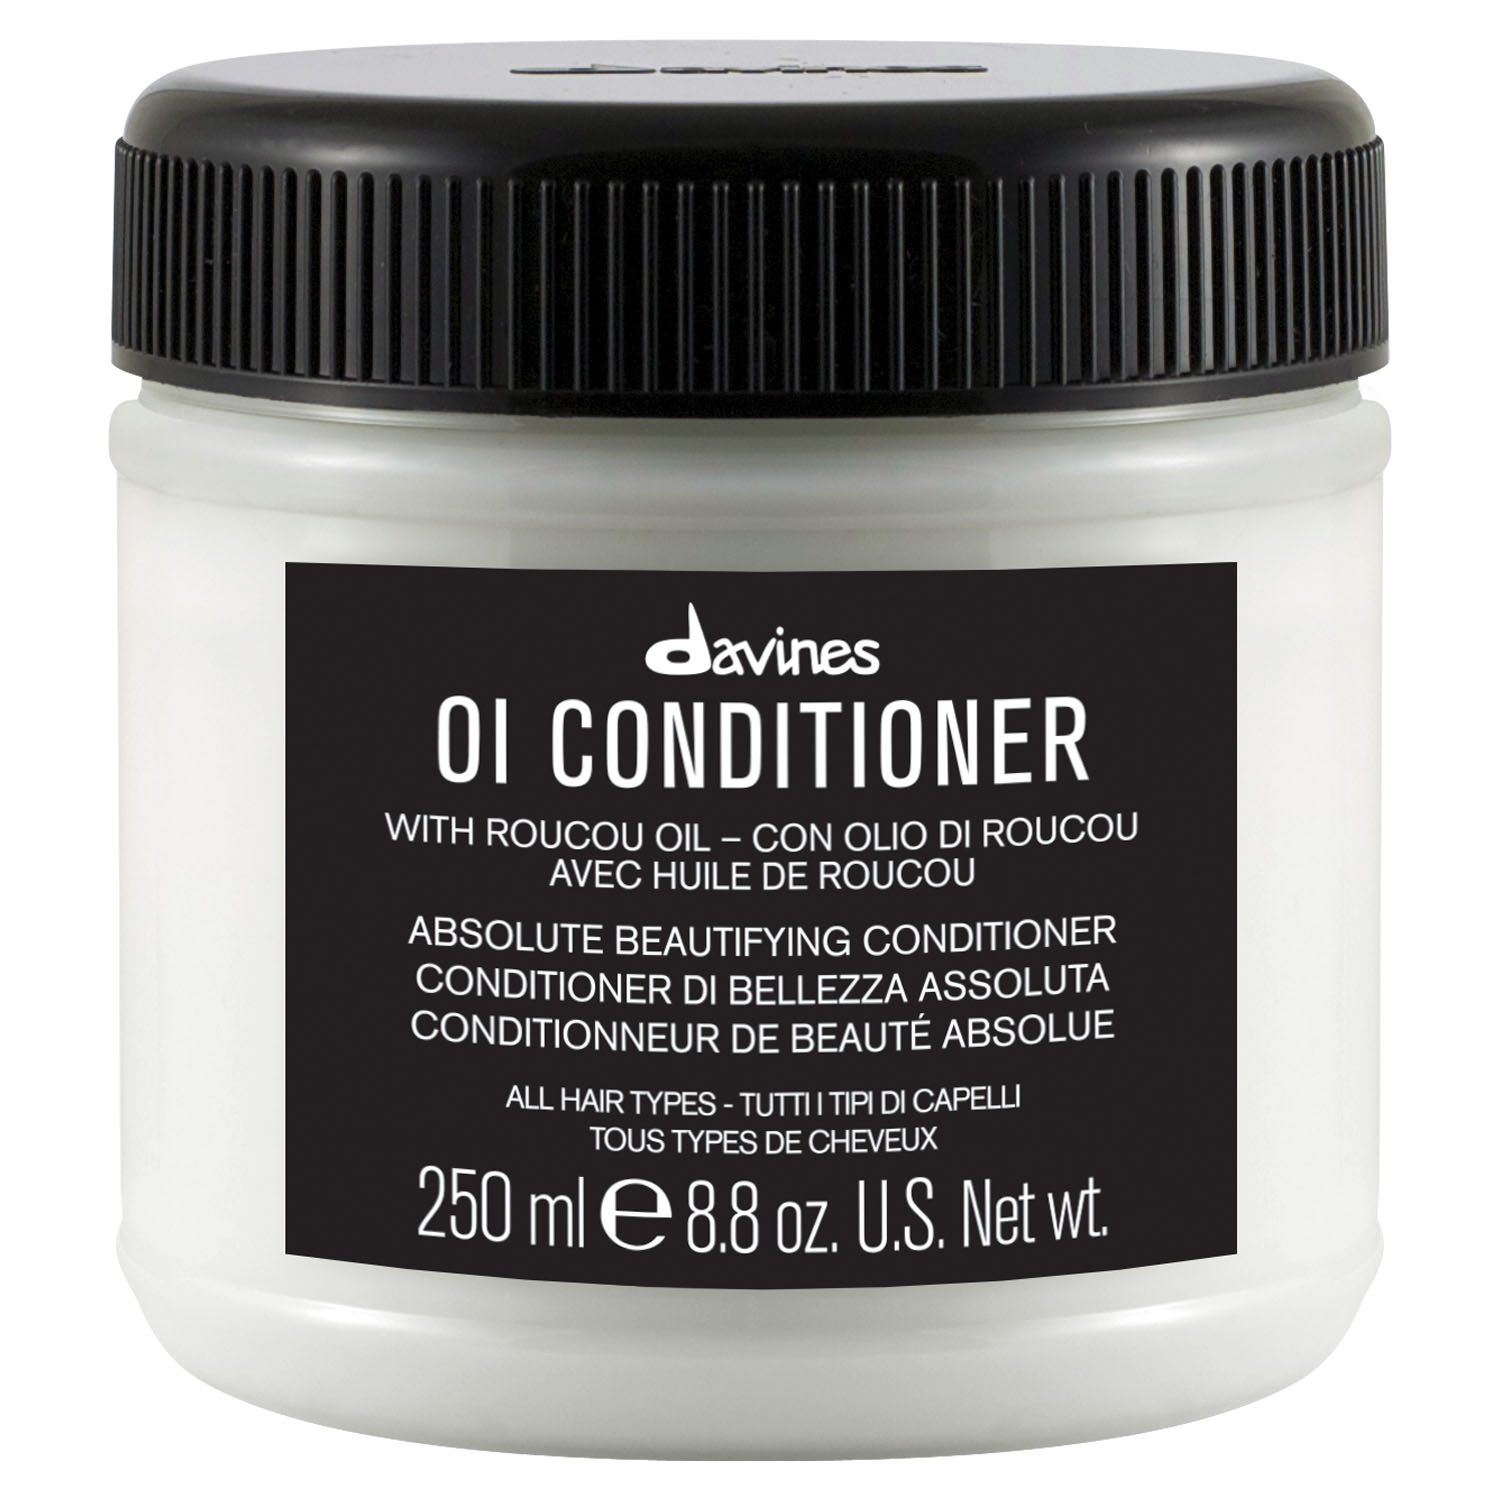 Davines Кондиционер для абсолютной красоты волос Absolute Beautifying Conditioner, 250 мл (Davines, OI)